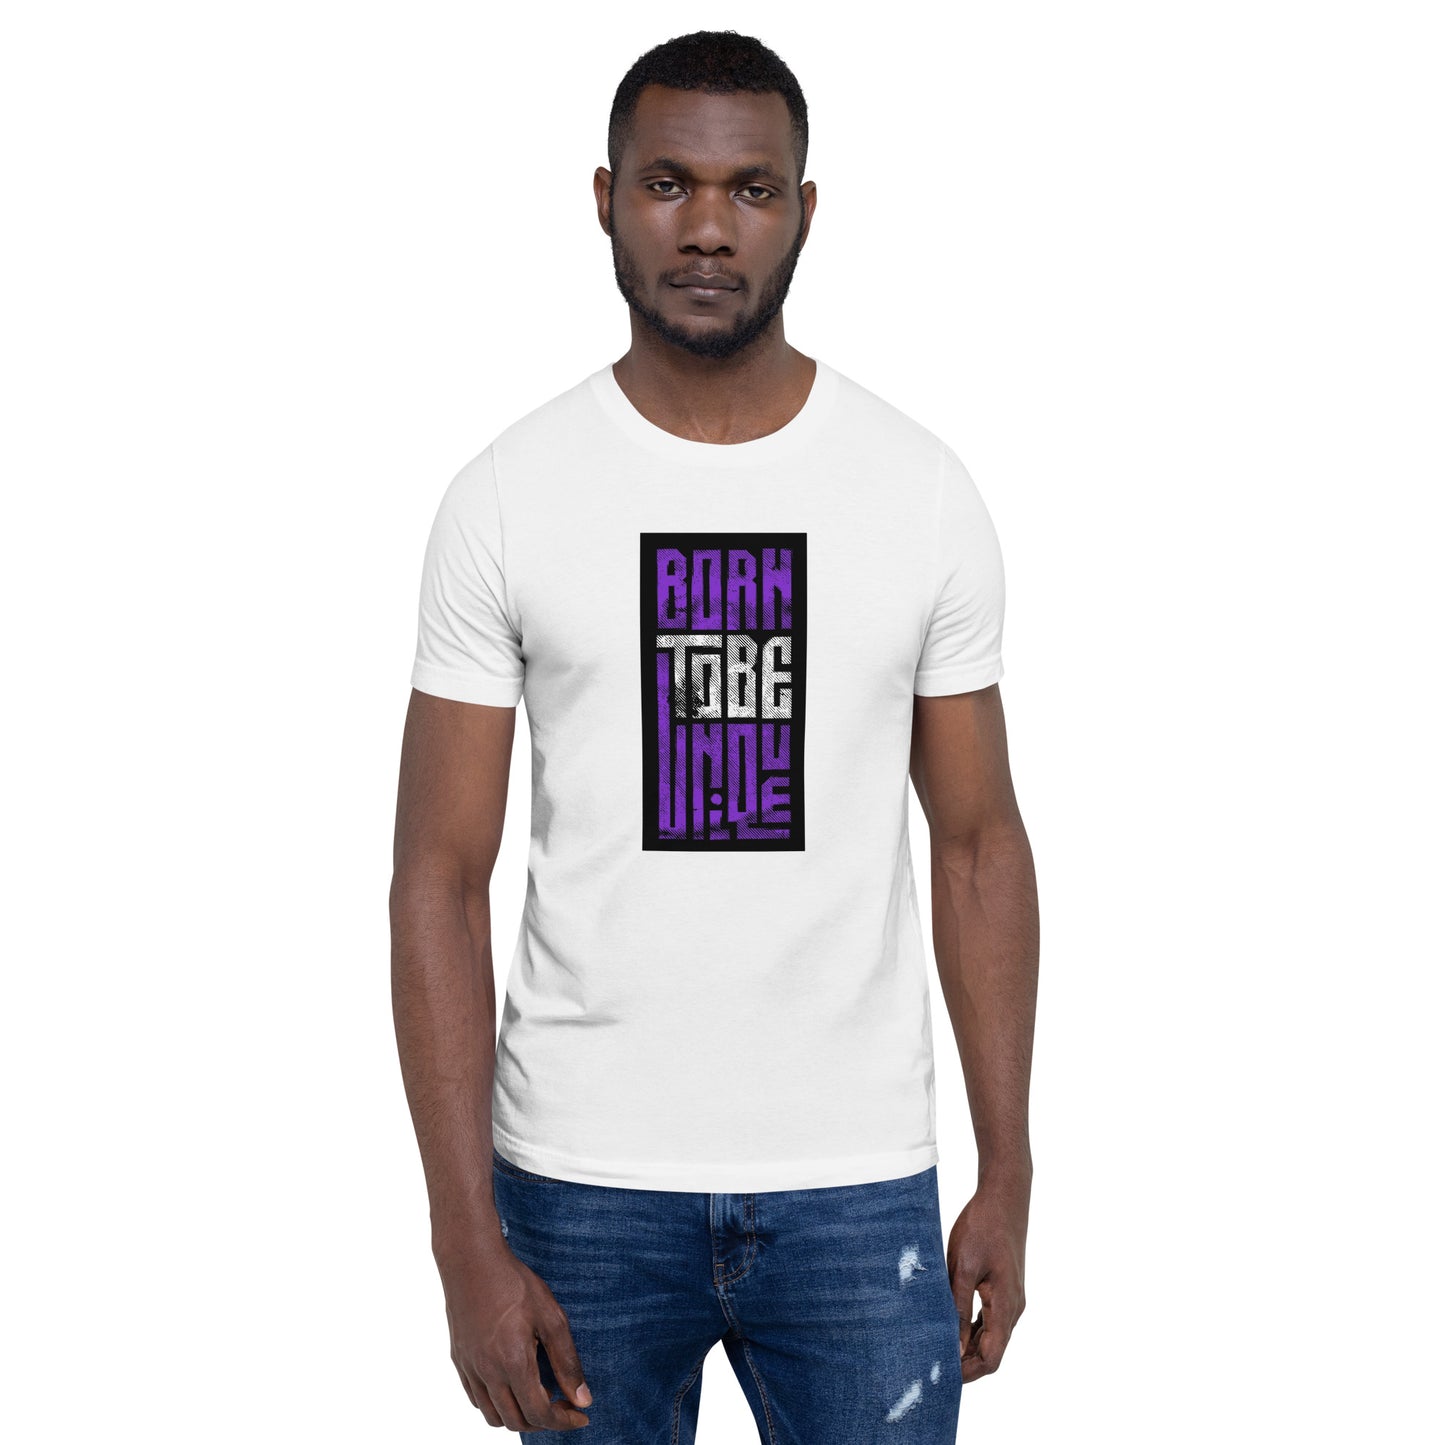 T-shirt - Nike SB Dunk Low Court Purple (Born to be unique)